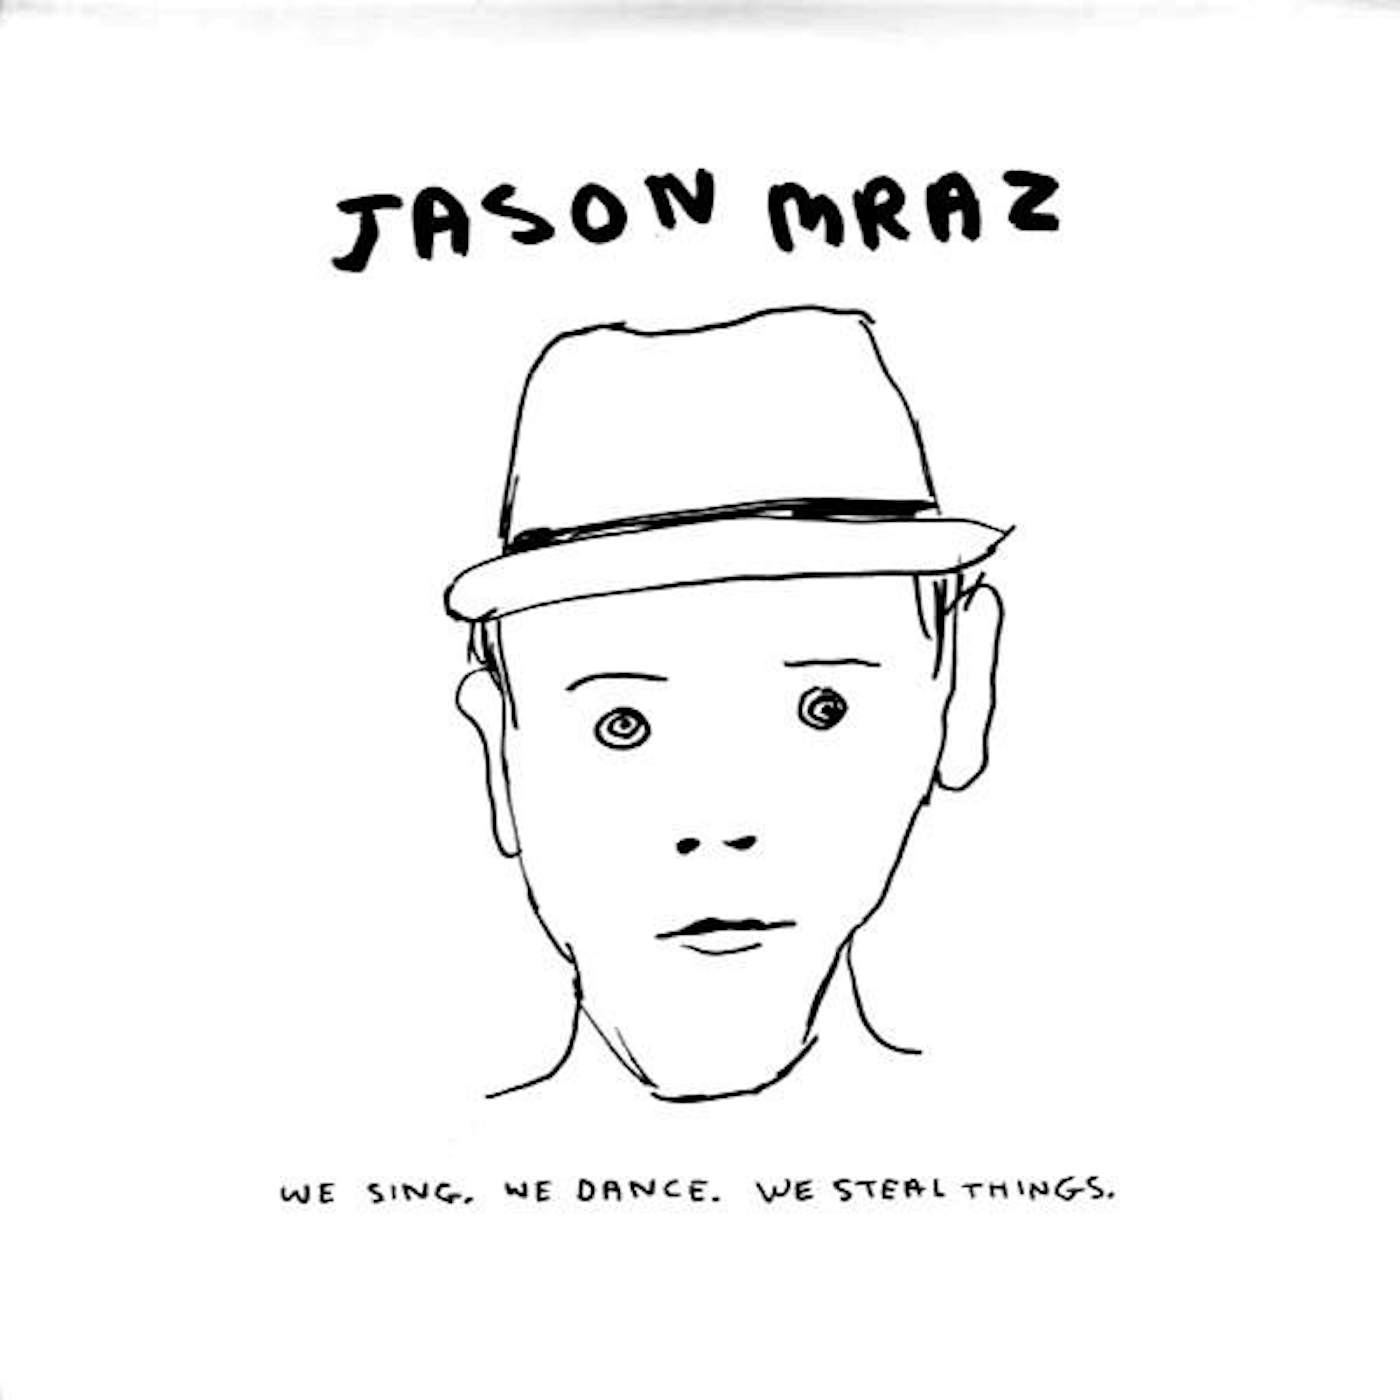 Jason Mraz WE SING WE DANCE WE STEAL THINGS Vinyl Record